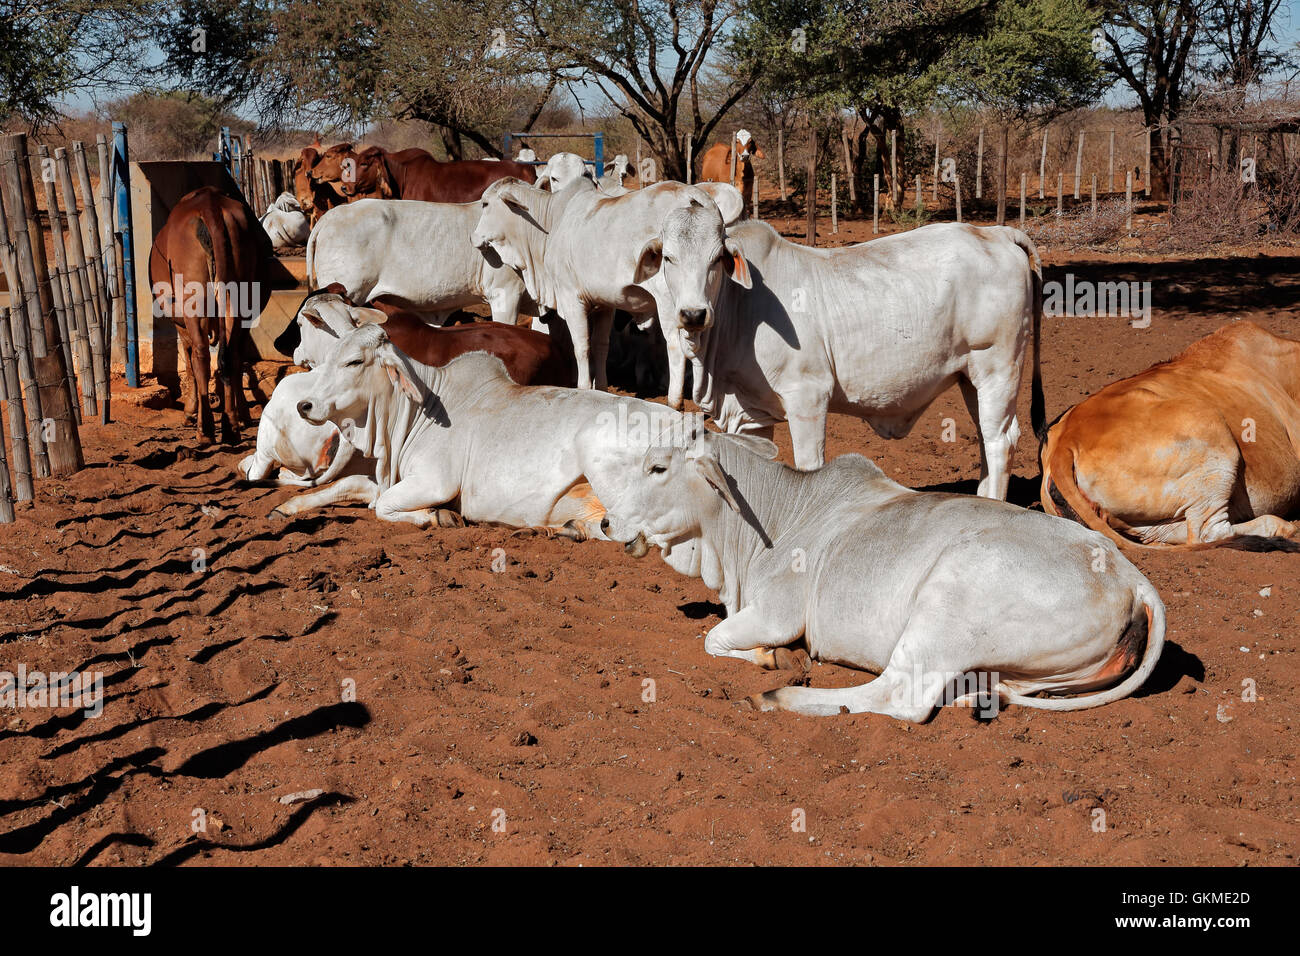 White Brahman cattle on a rural African free-range farm Stock Photo